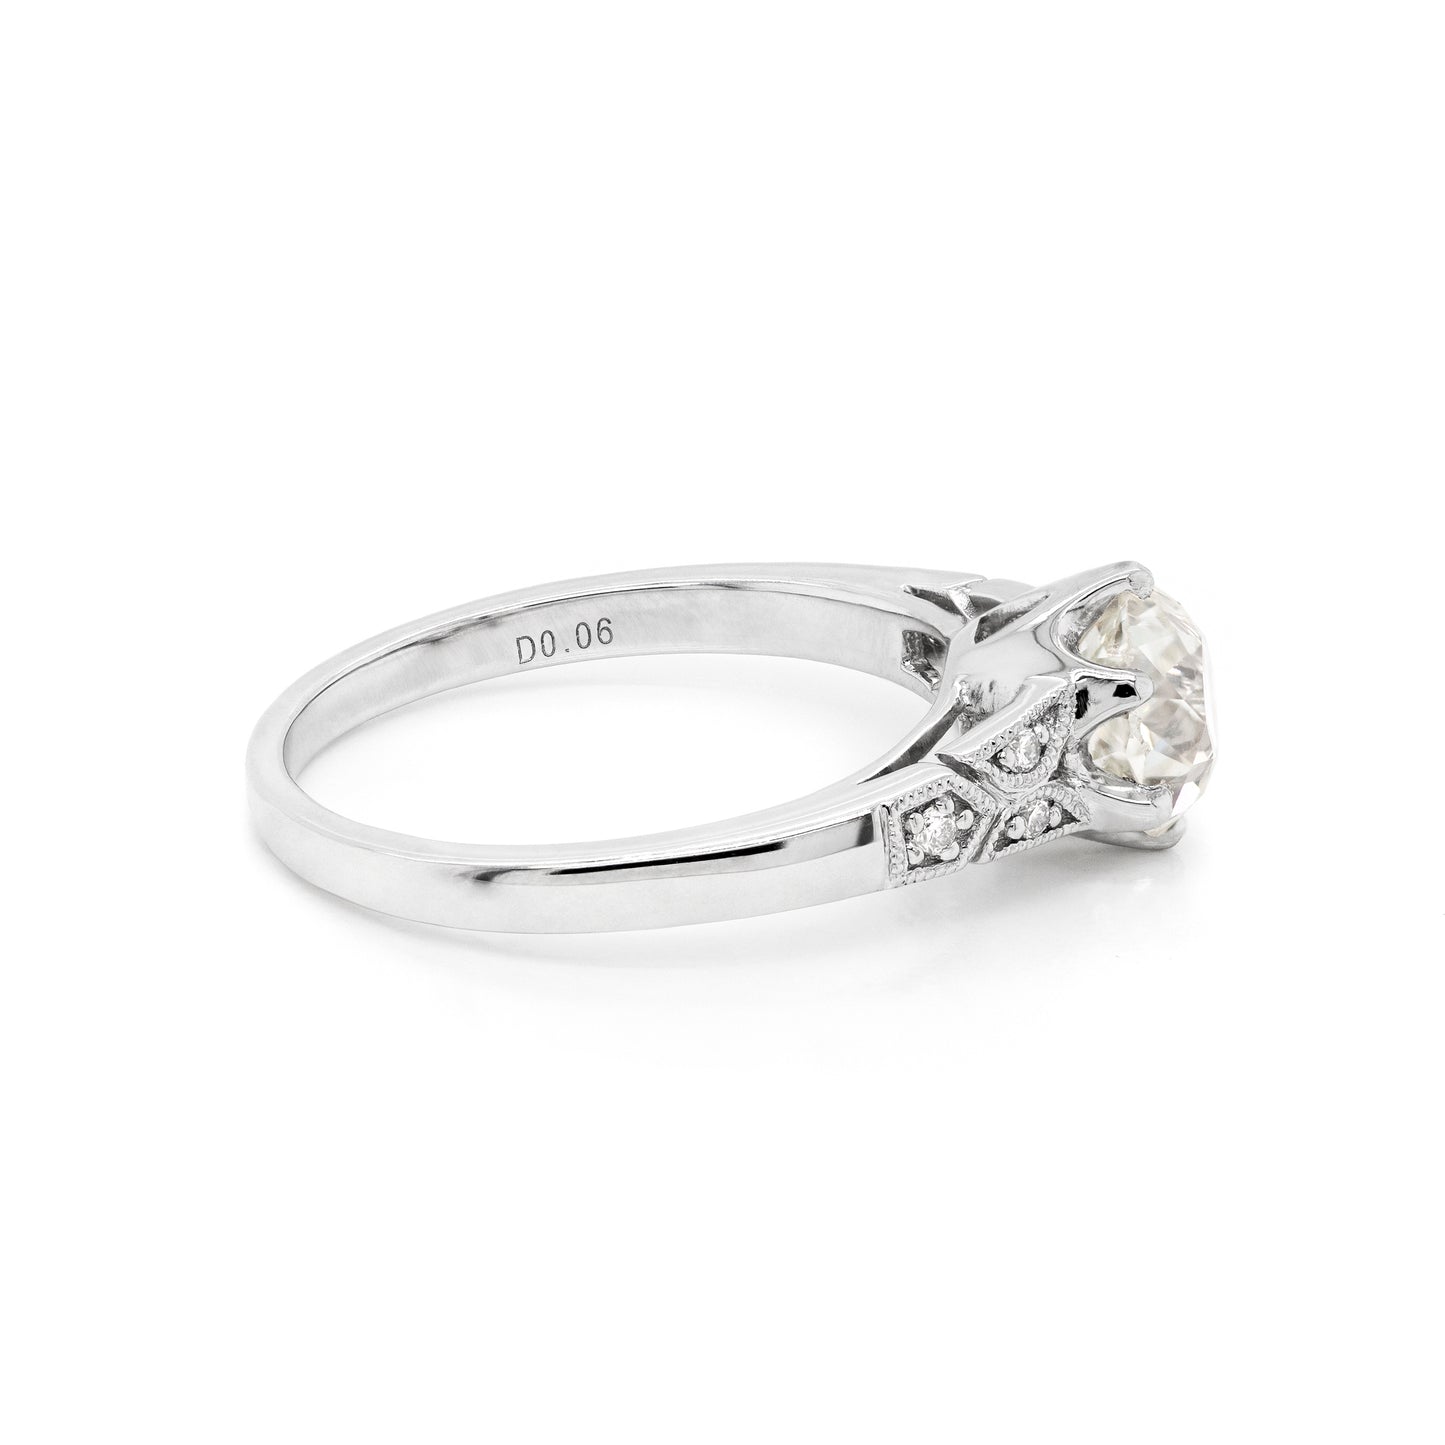 1.25 Carat Old Mine Cut Diamond Platinum Engagement Ring